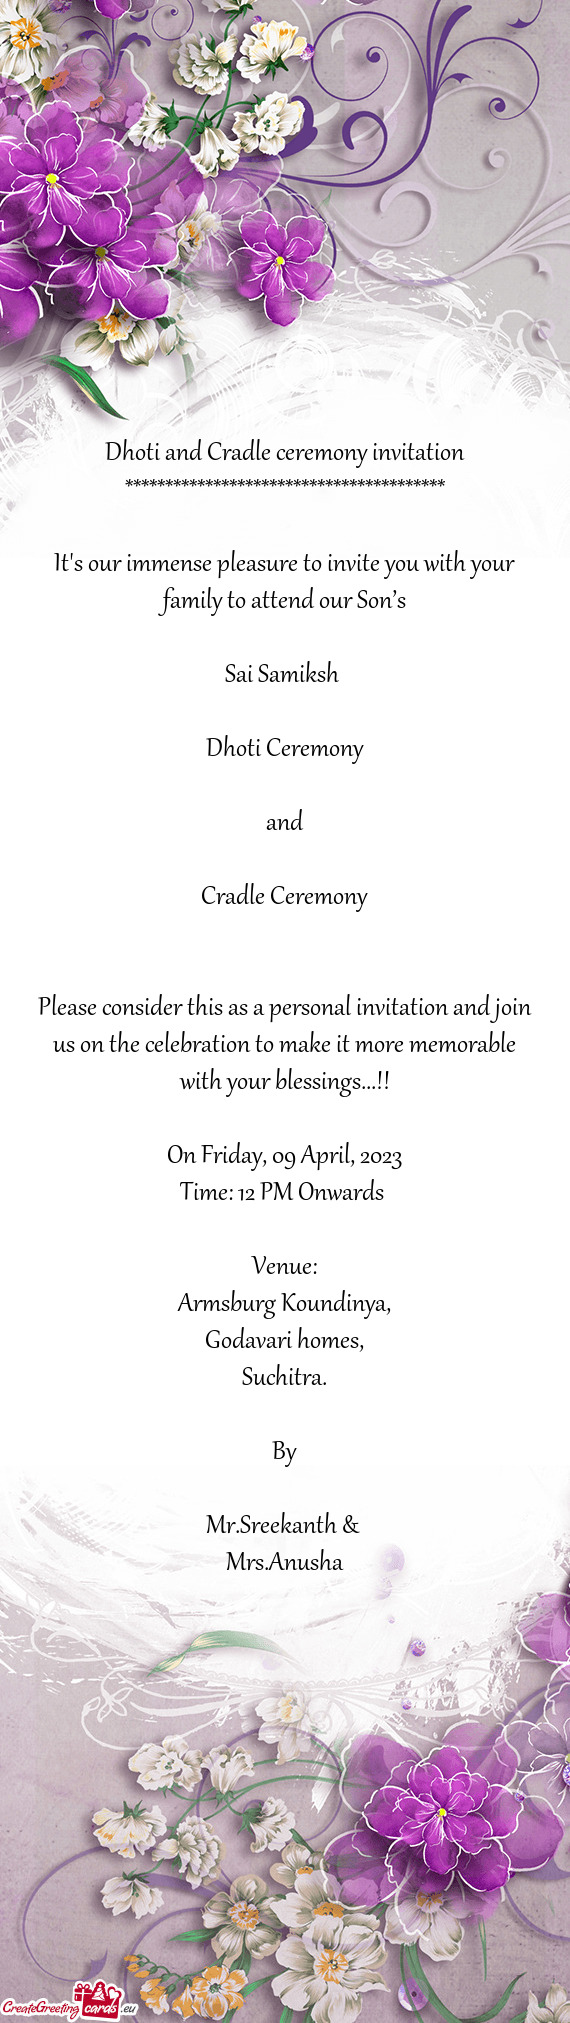 Dhoti and Cradle ceremony invitation